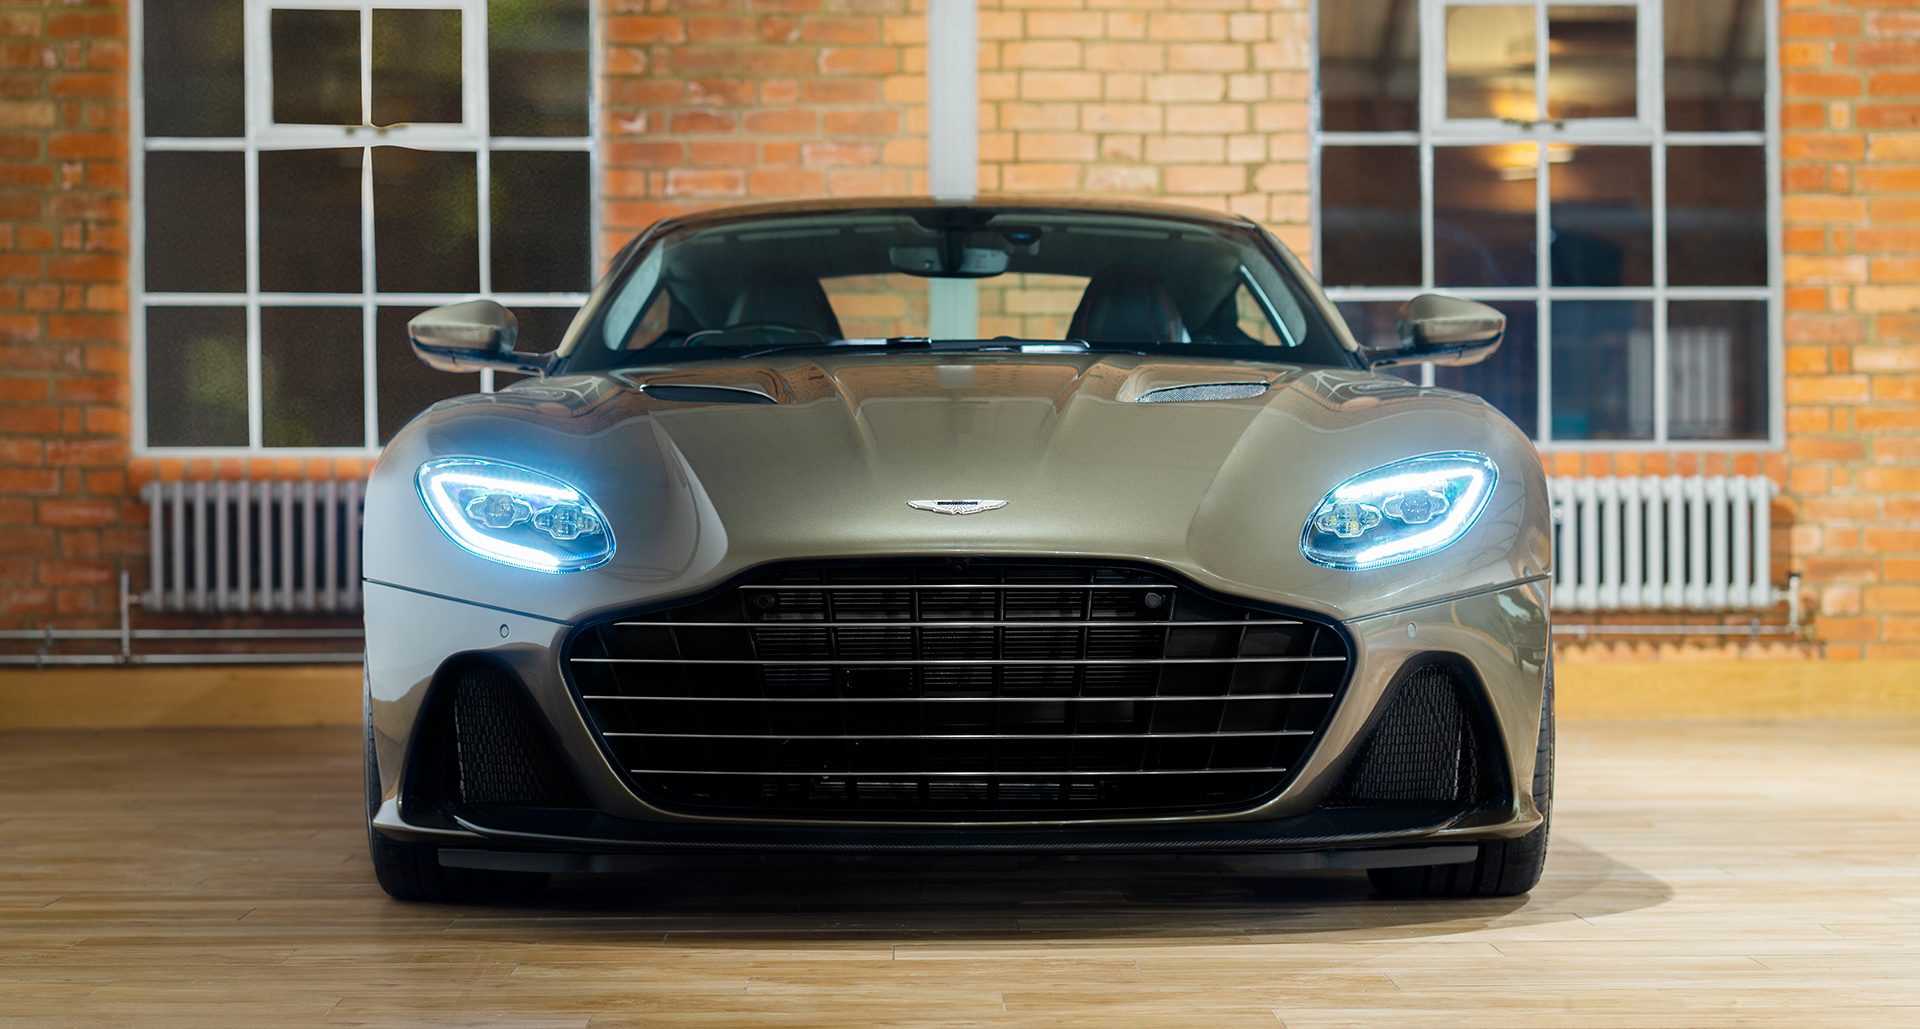 Aston Martin DBS Superleggera Edition James Bond 007 On Her Majesty’s Secret Service